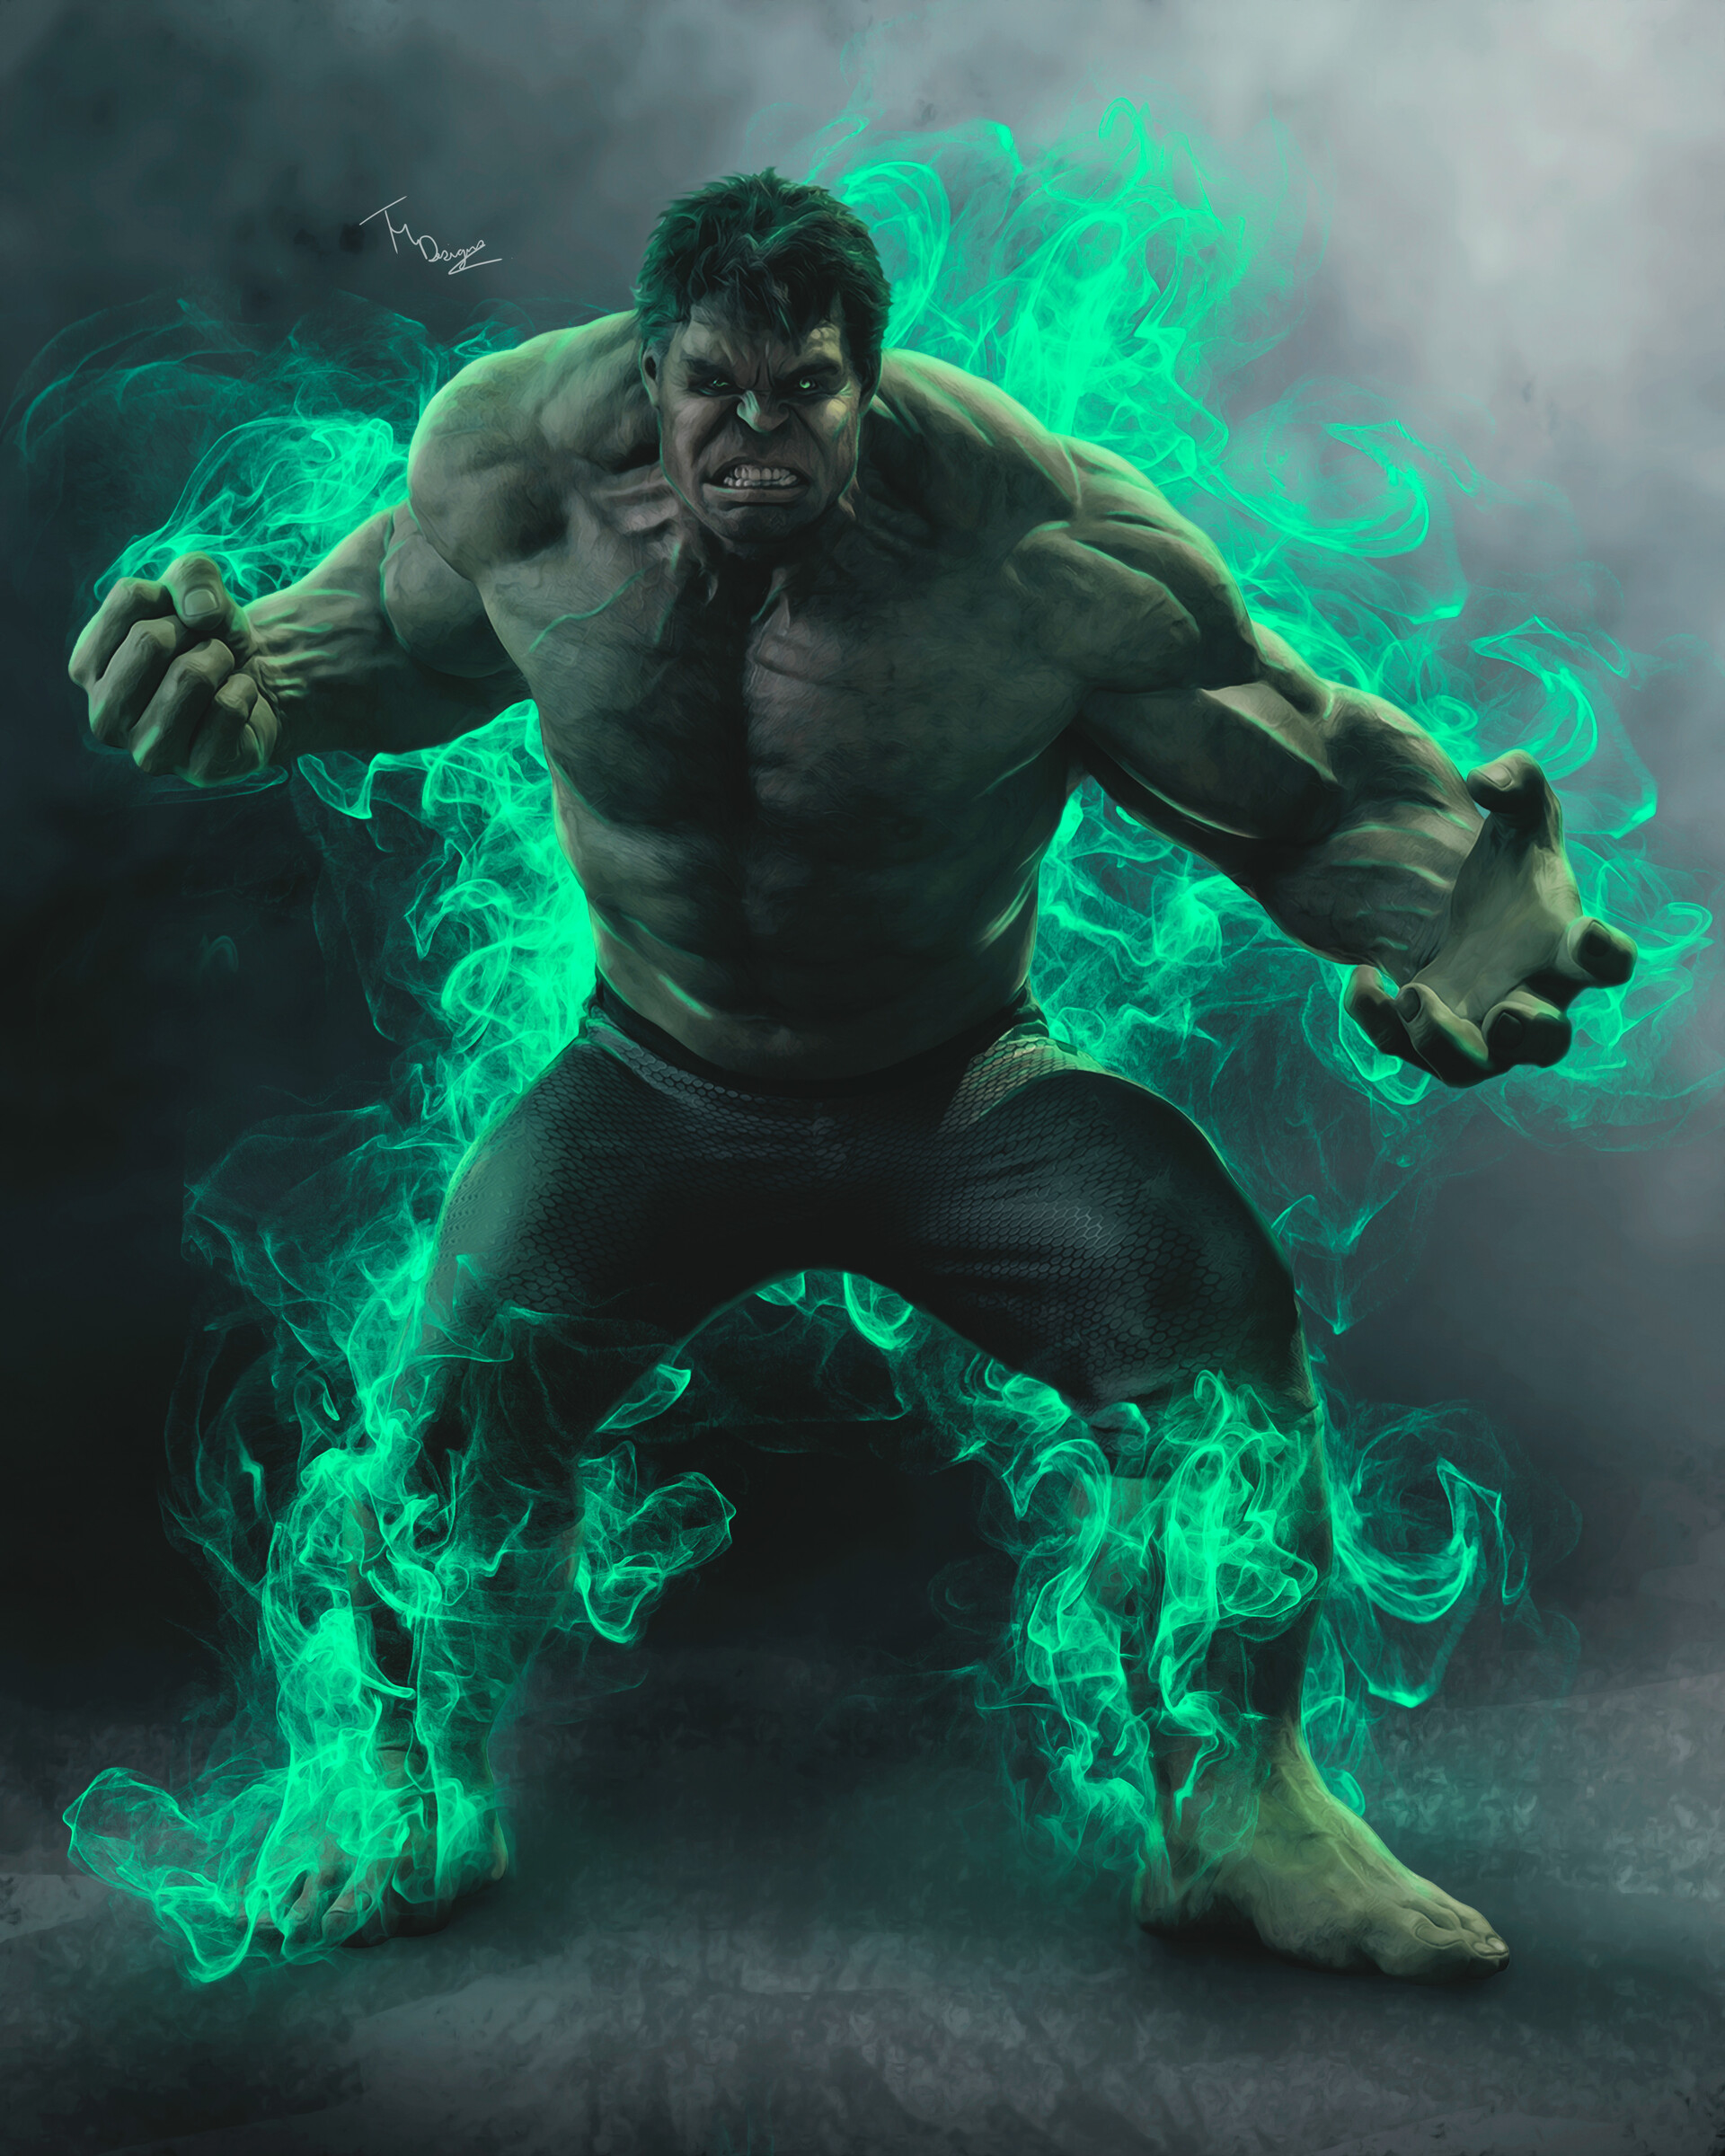 Hulk Smash 4k Wallpaper, HD Superheroes 4K Wallpapers, Images, Photos and  Background - Wallpapers Den